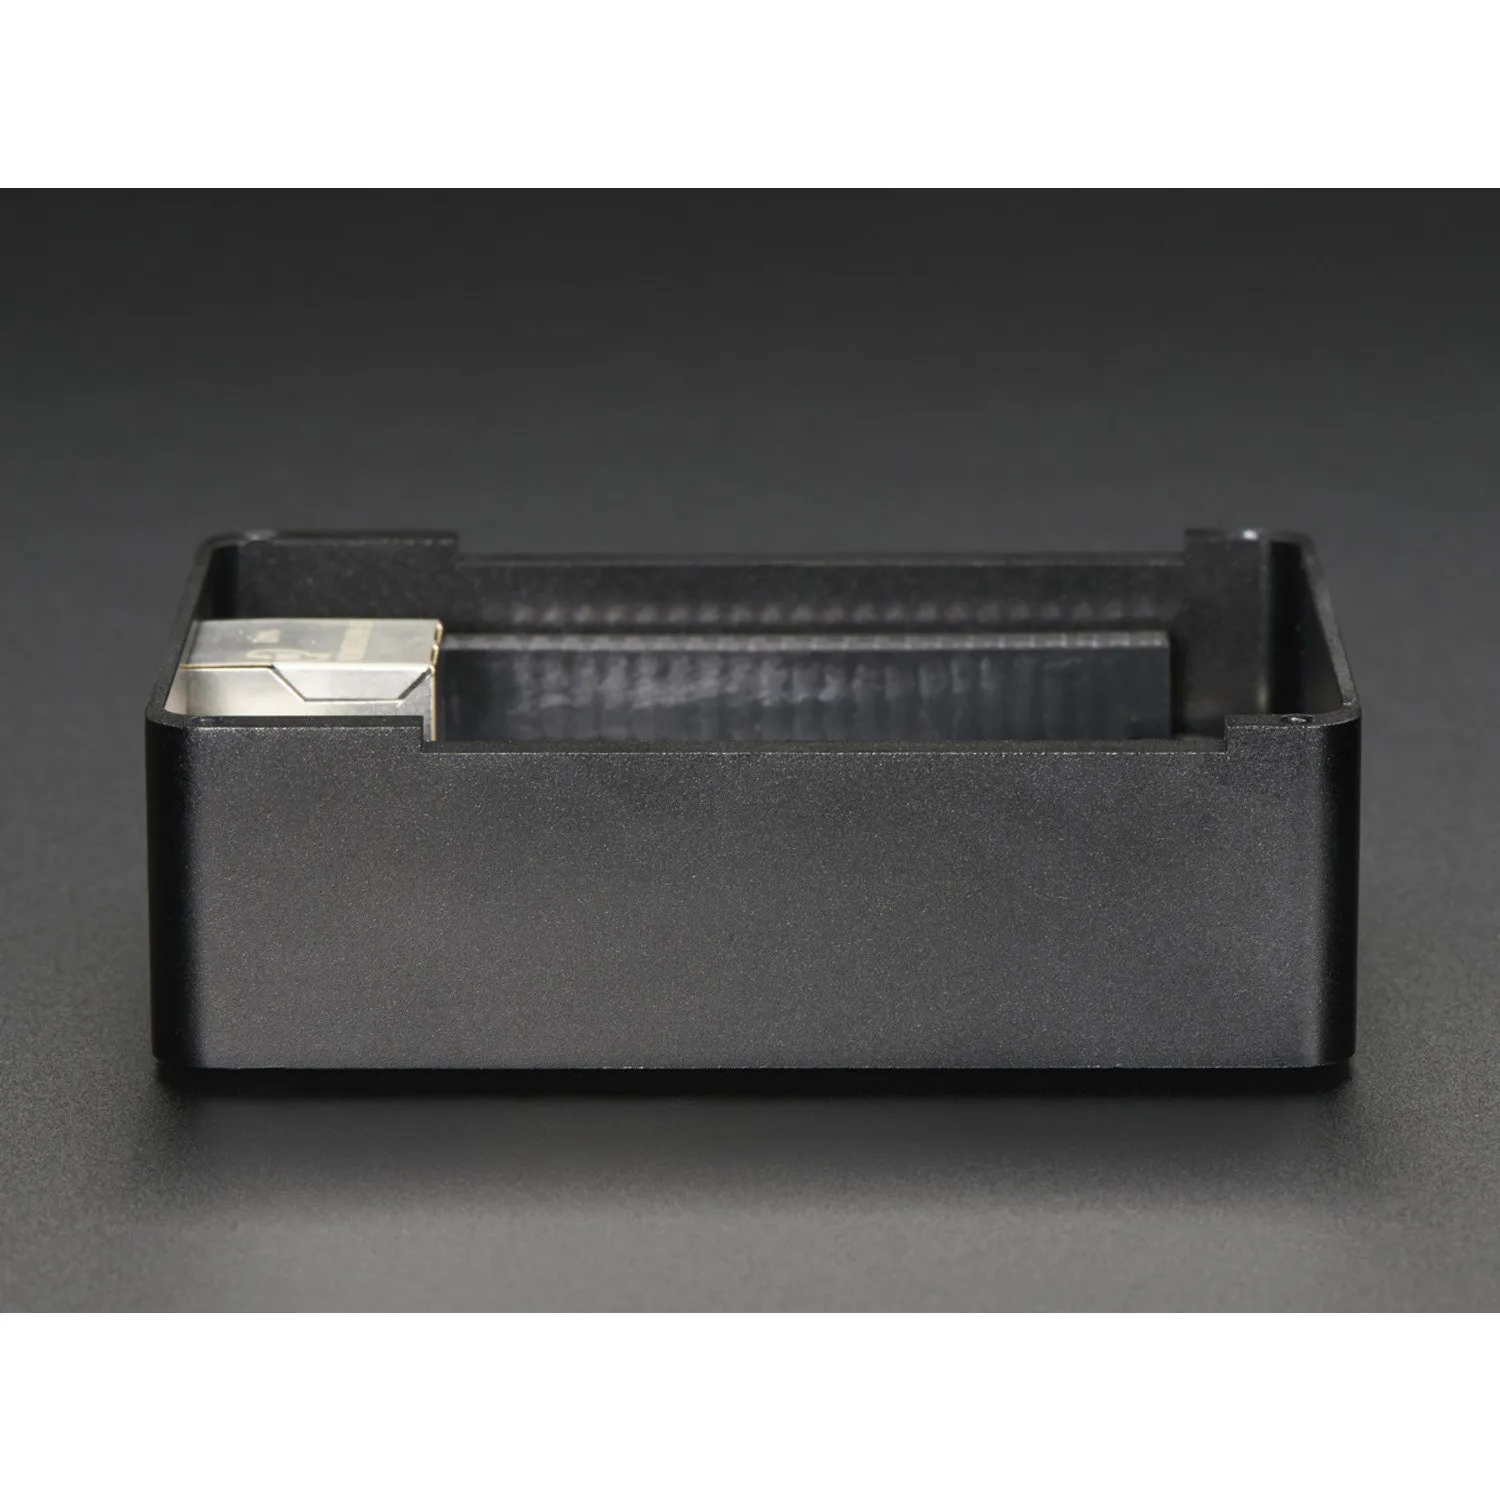 Photo of Anidees Beaglebone Black Case - Black Aluminum with Smoke Top